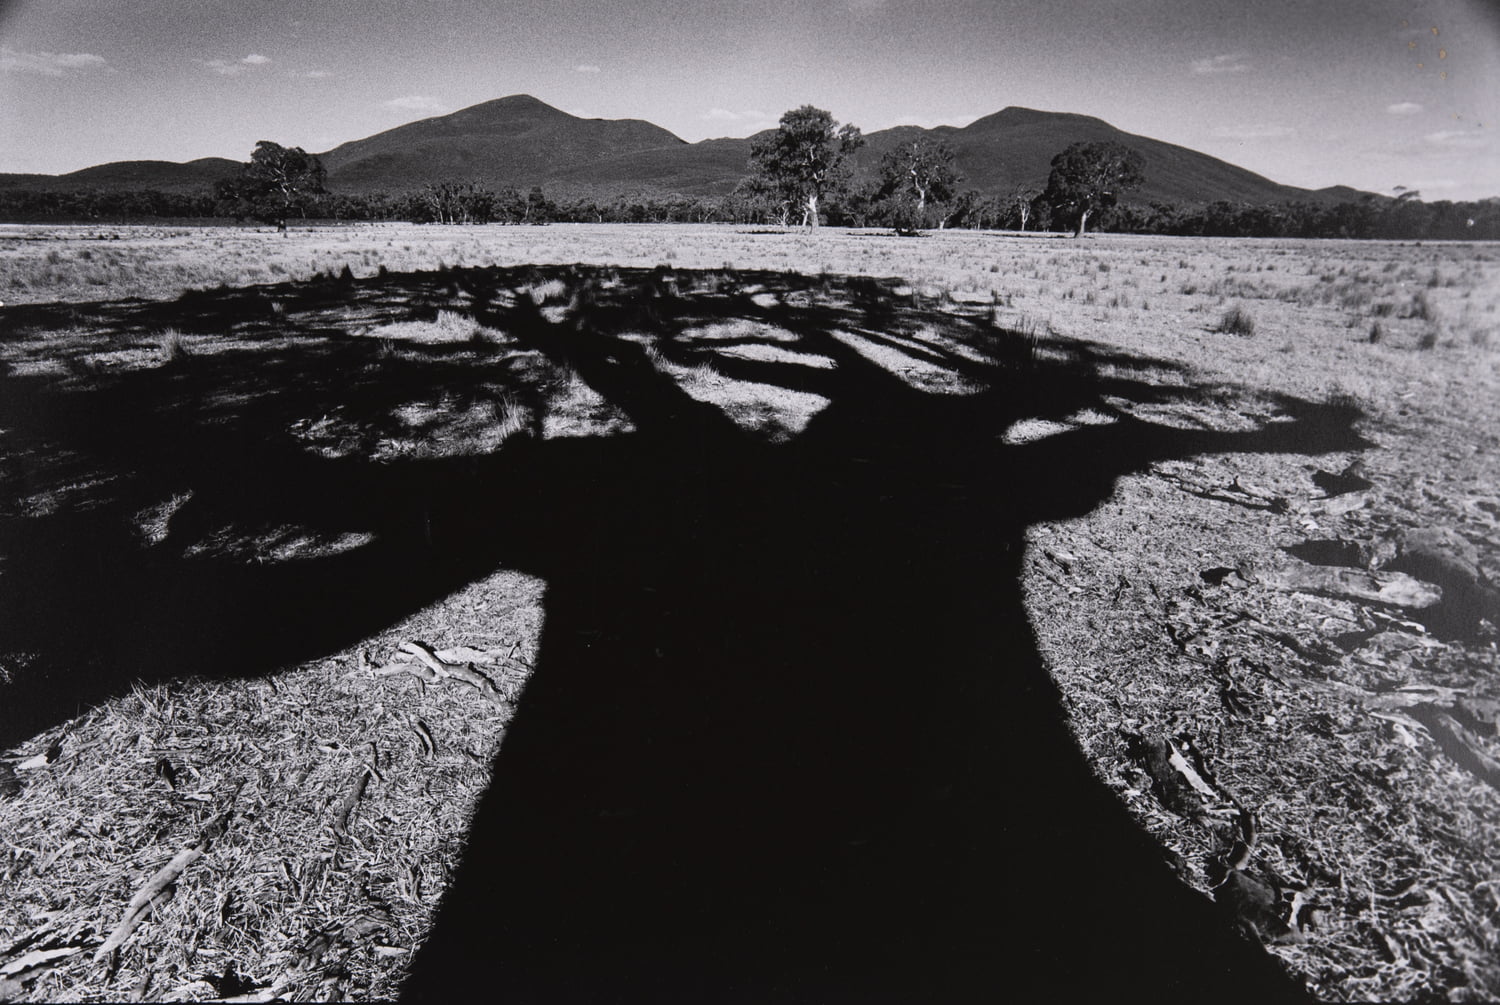 Shadow of massive redgum, Victoria Valley